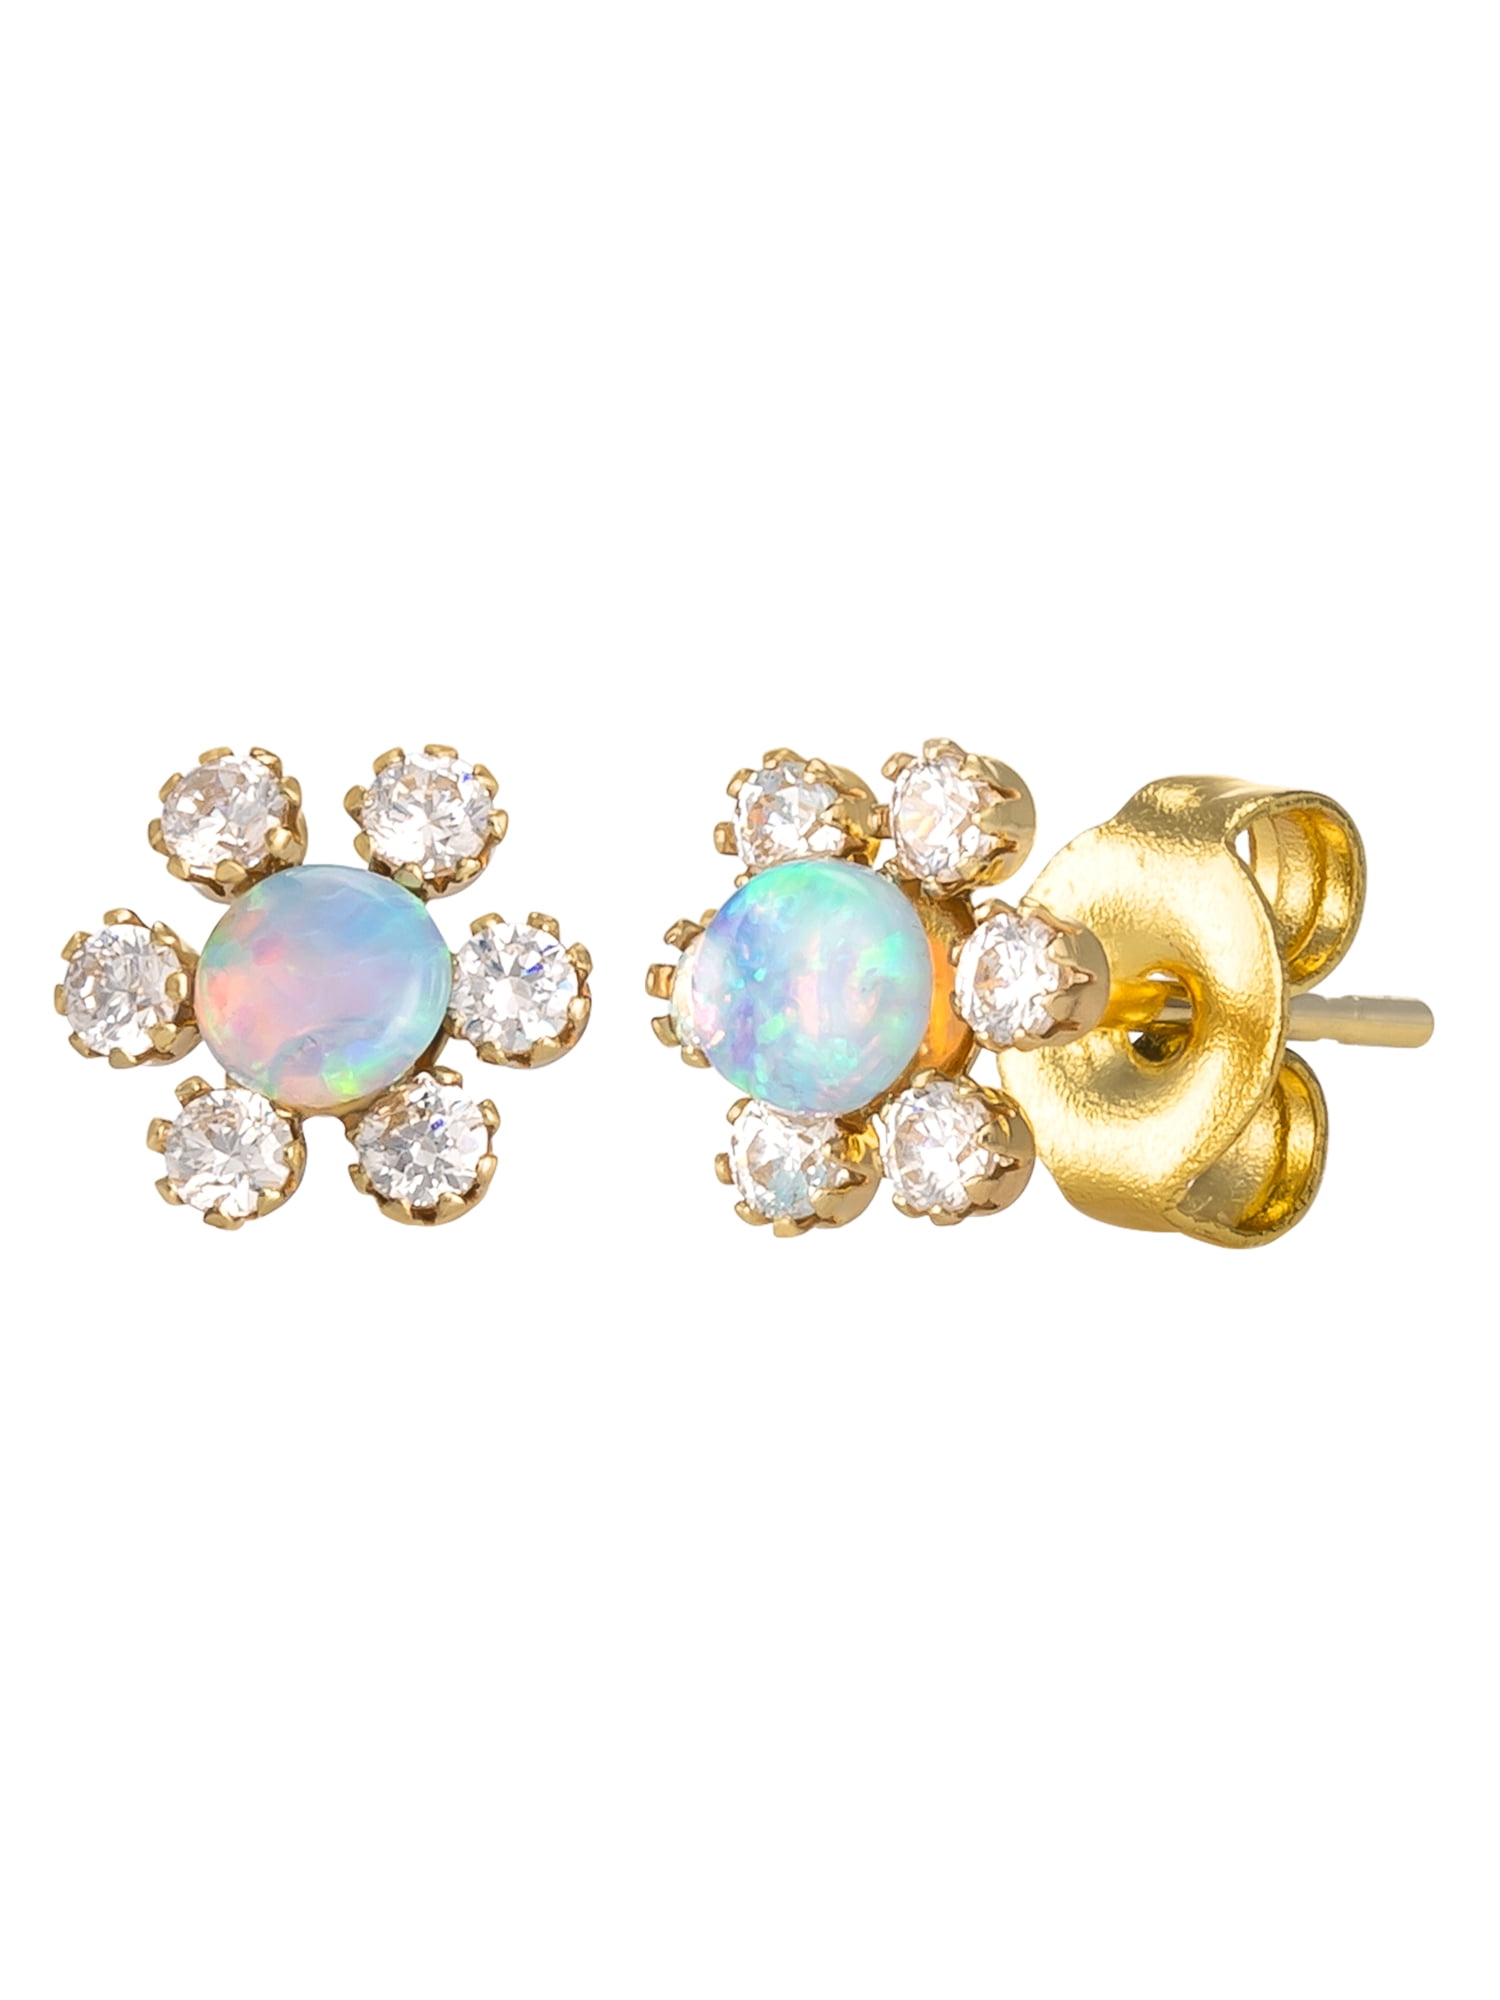 Vintage Style Jewellery Opal Flowers Earrings 18K White Gold Plated